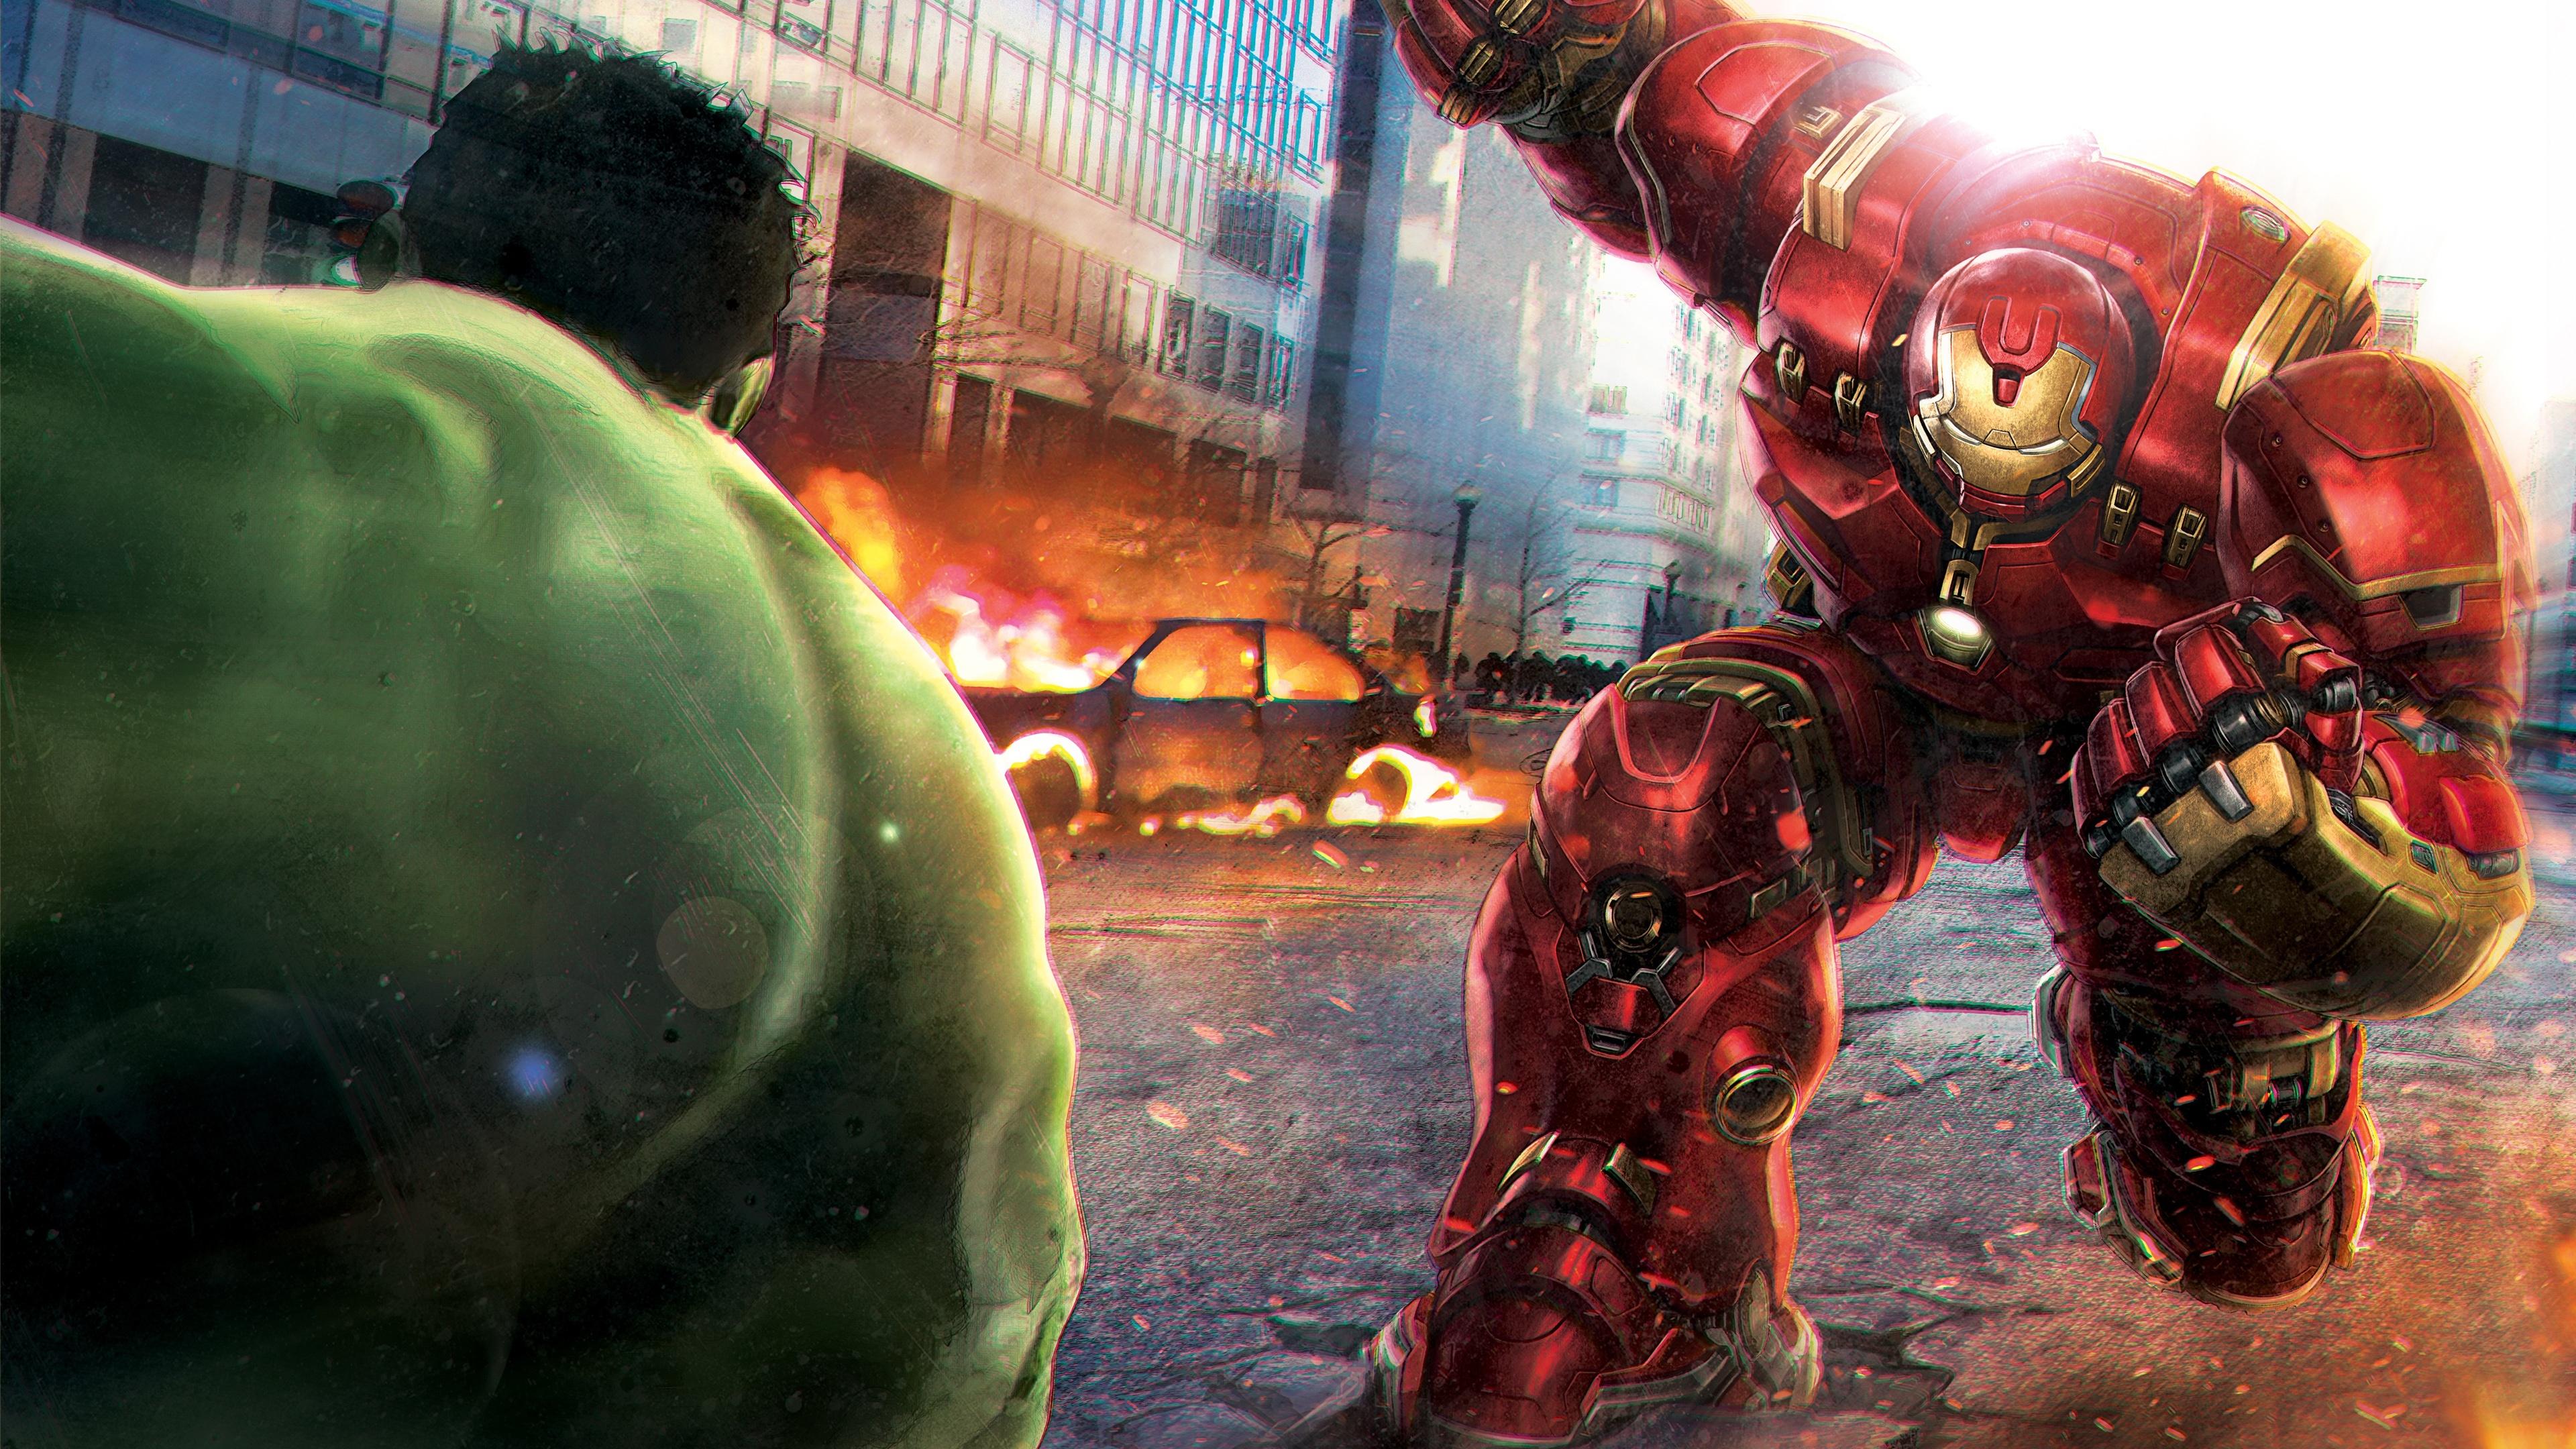 Hulk Vs Hulkbuster Wallpaper in jpg format for free download